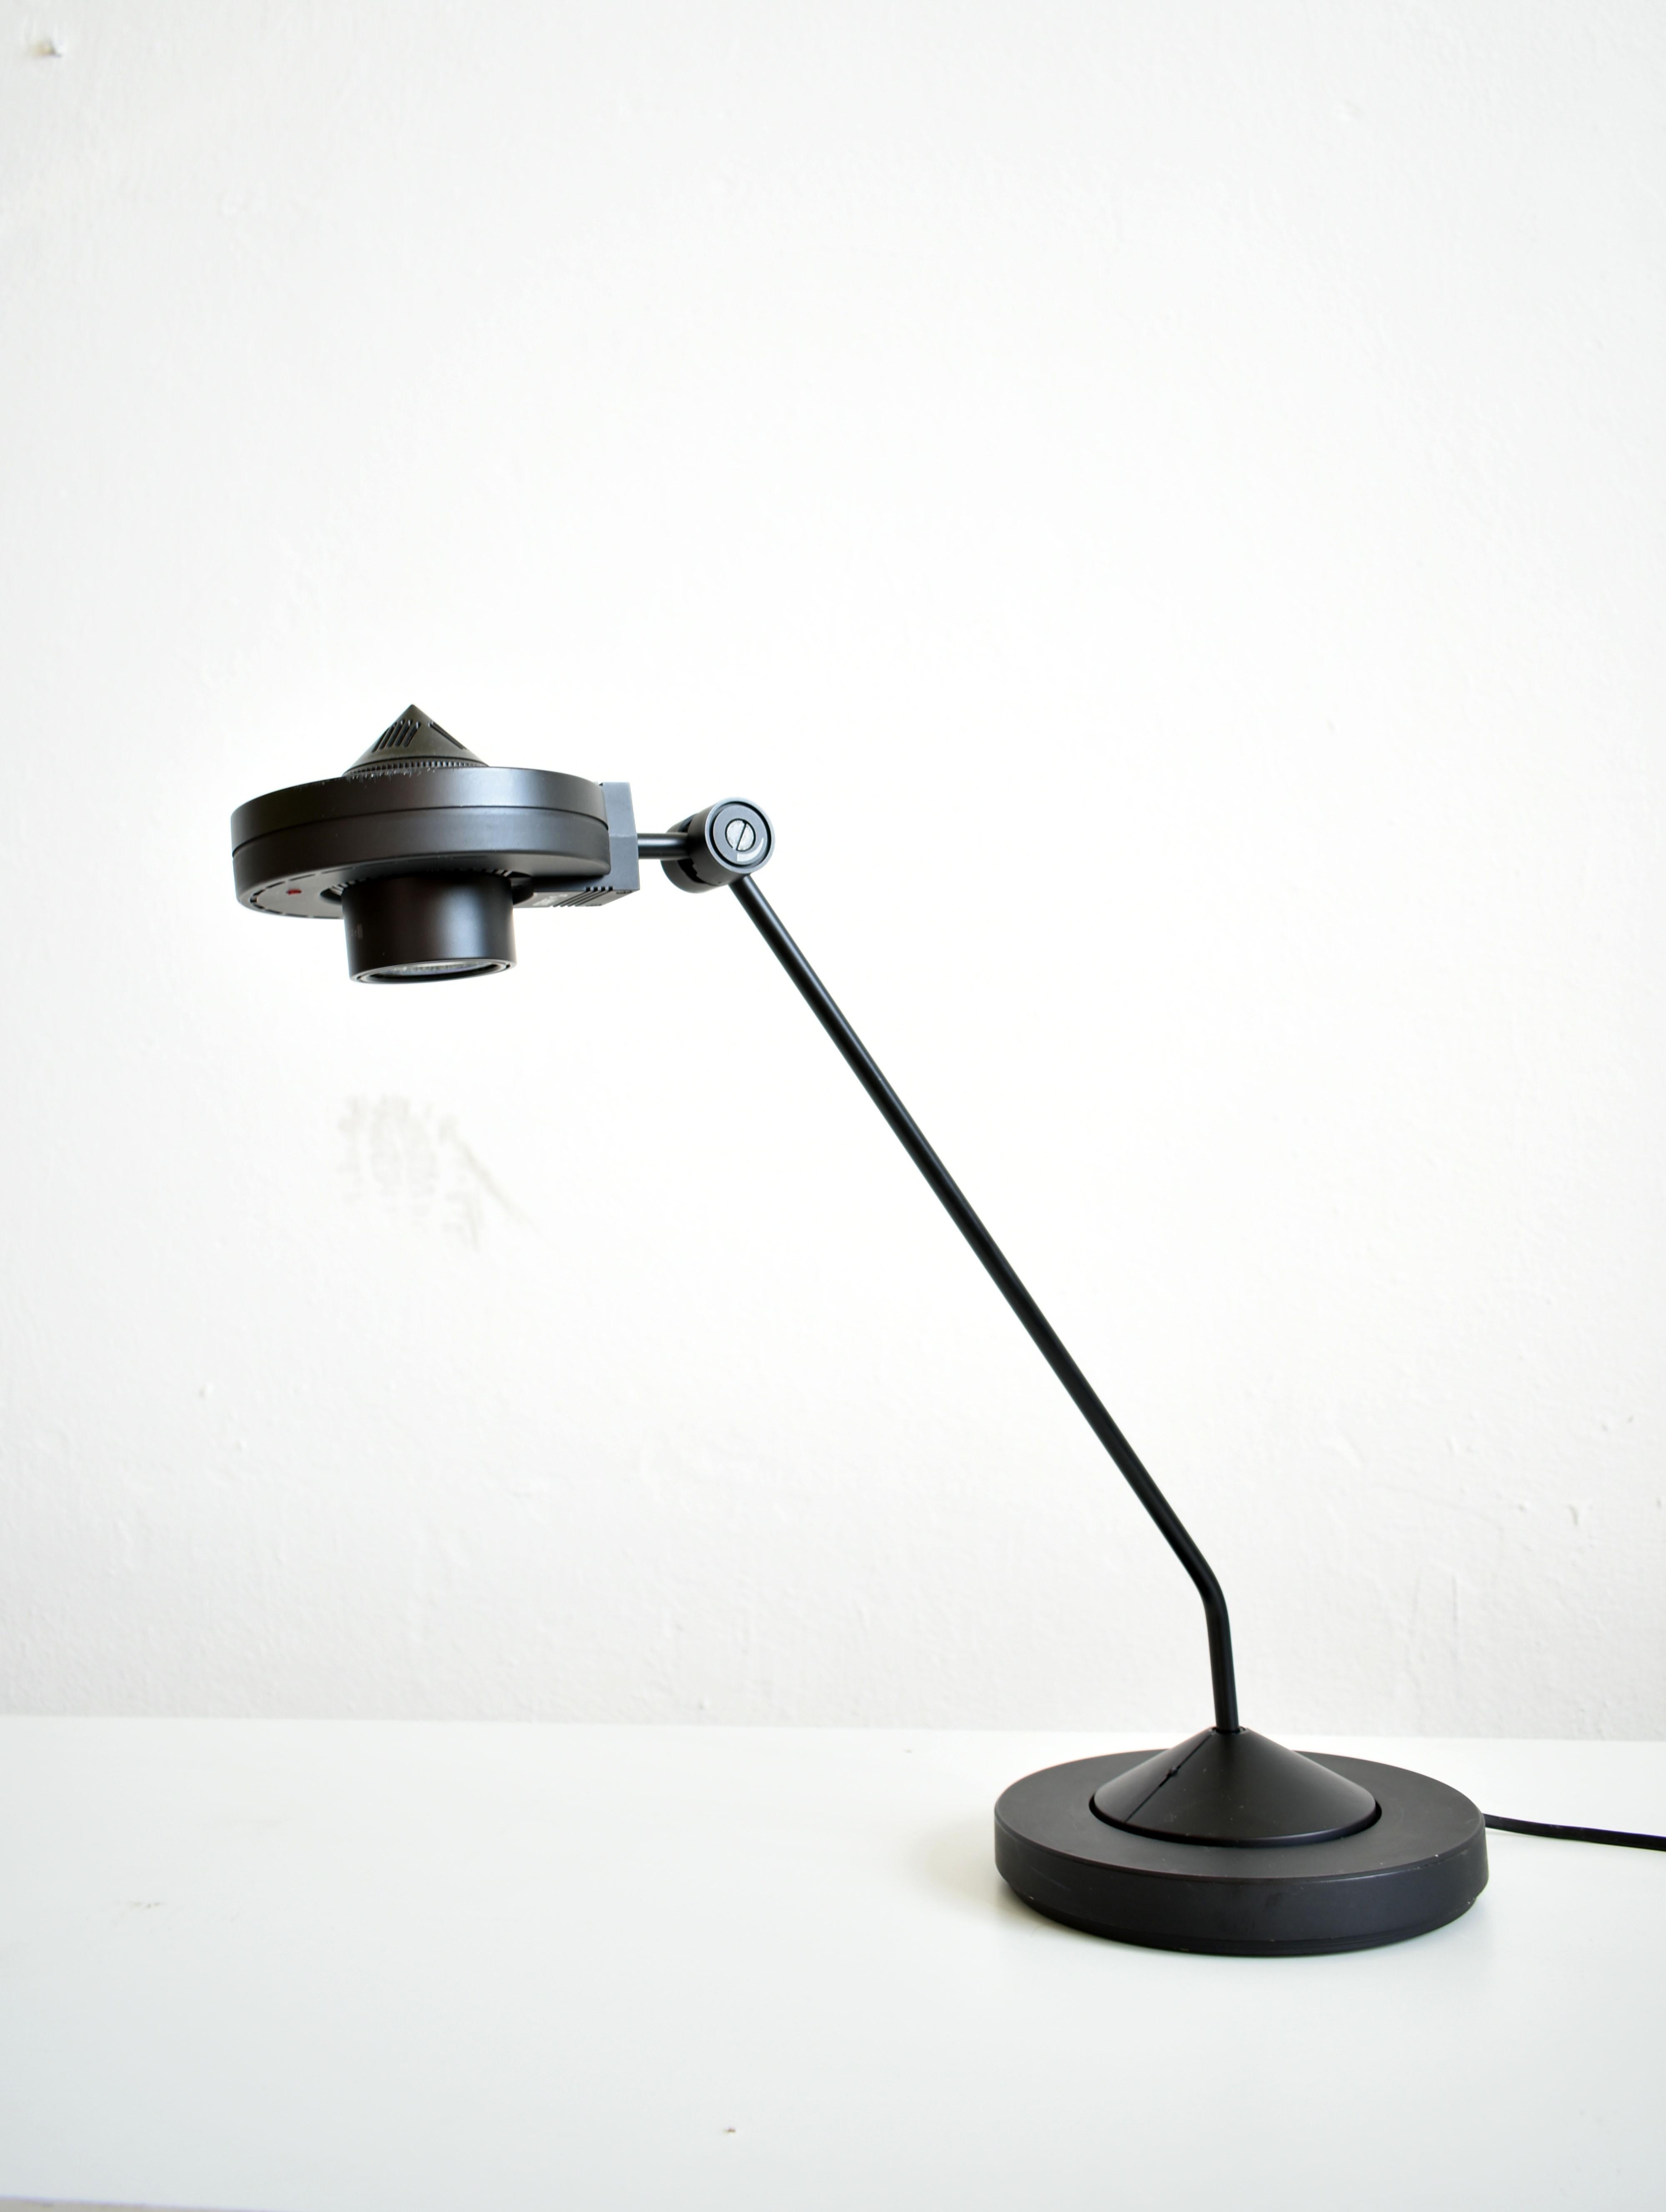 Metal Postmodern Halogen Desk Lamp 'Discus', Hartmut S. Engel for Staff, Germany 1980s For Sale